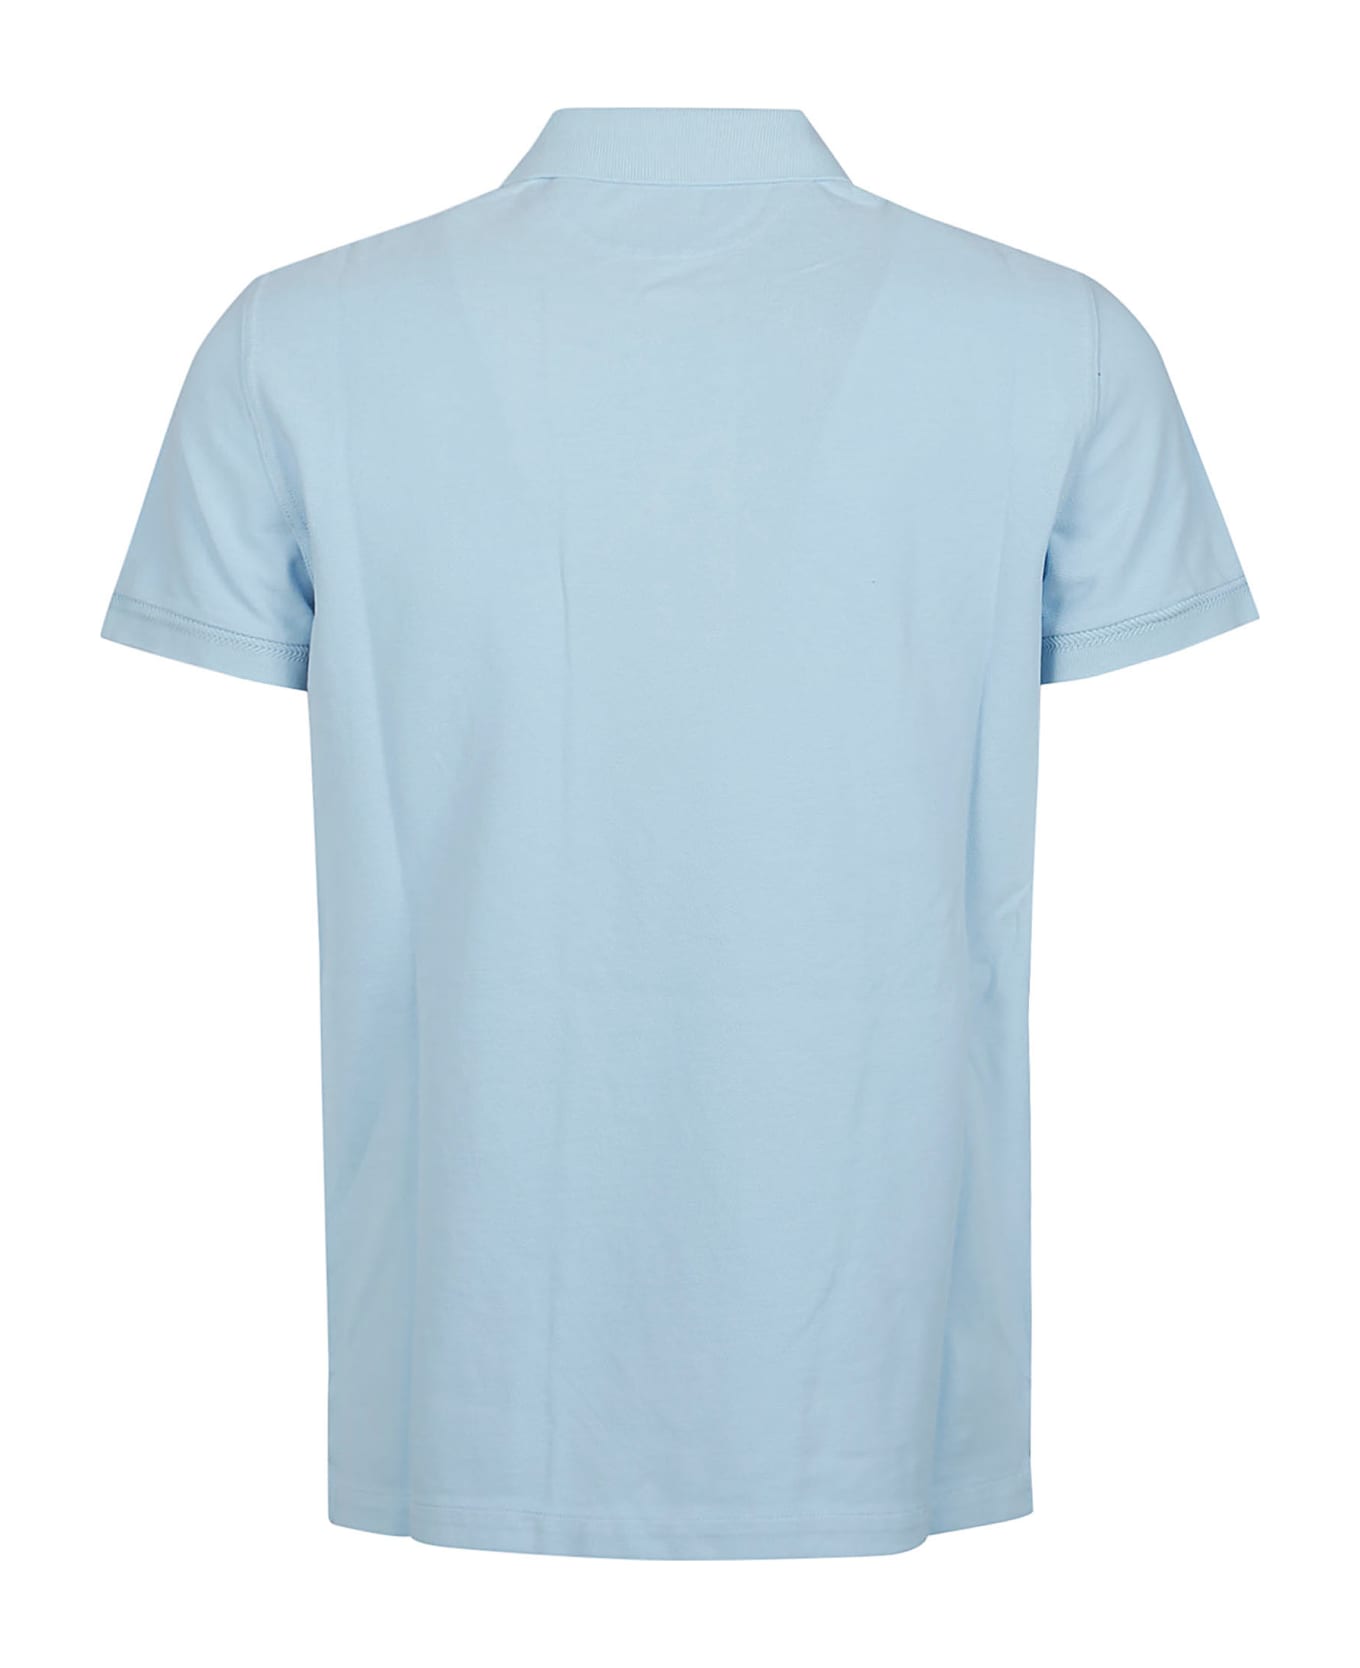 Tom Ford Tennis Piquet Short Sleeve Polo Shirt - Pale Sky